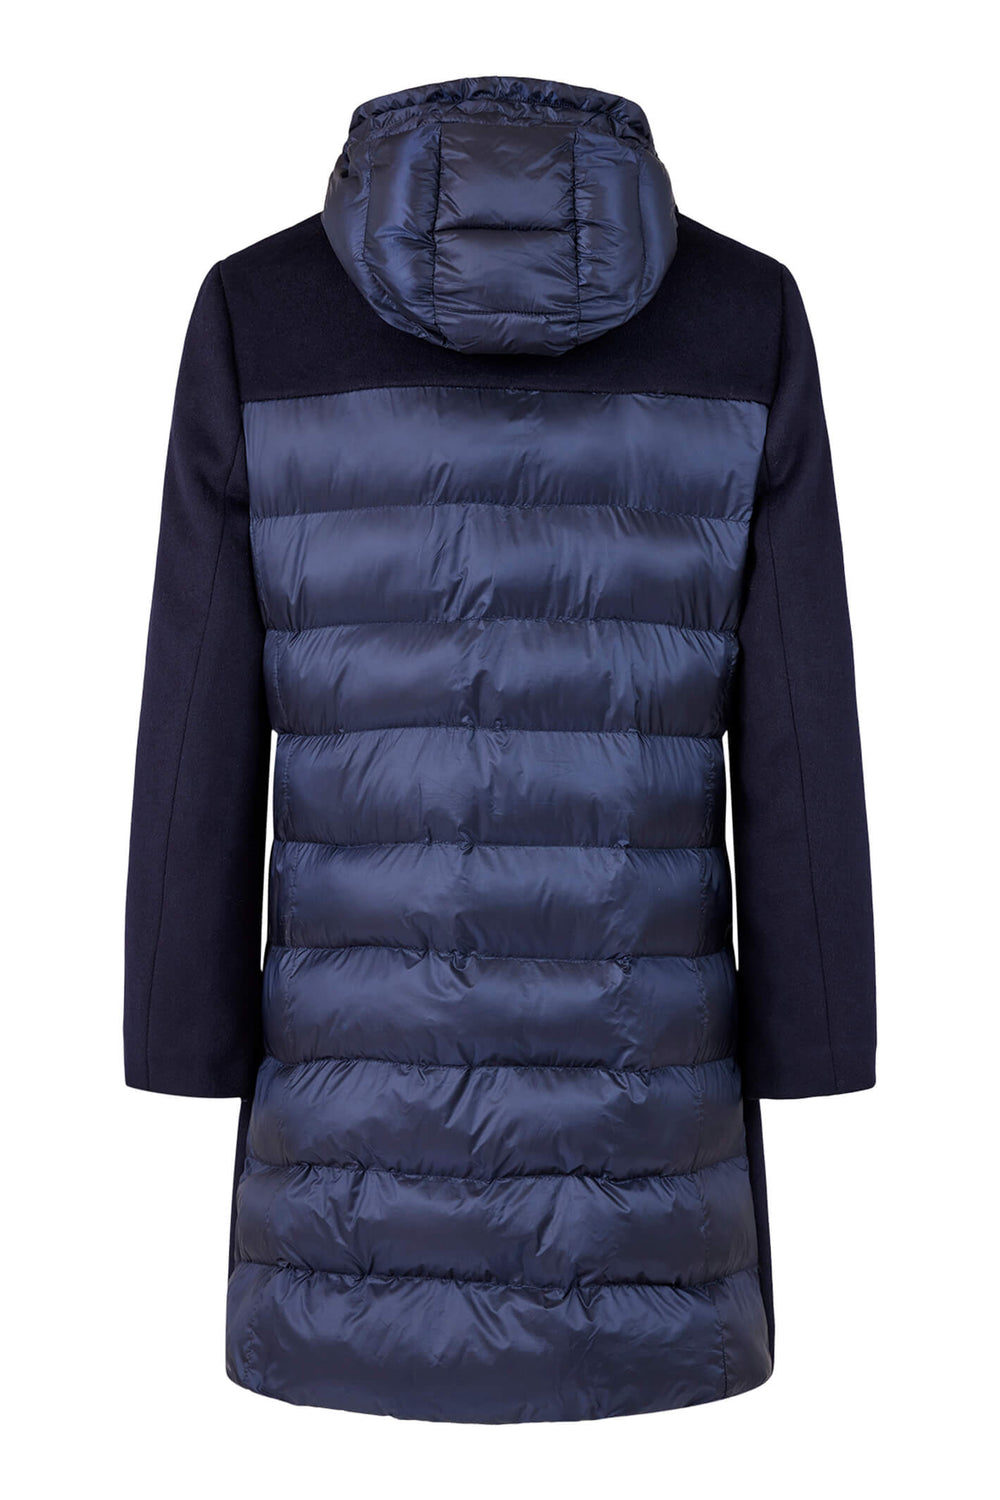 Normann 7723-55-69 Navy Blue Padded Back Coat With Hood - Olivia Grace Fashion